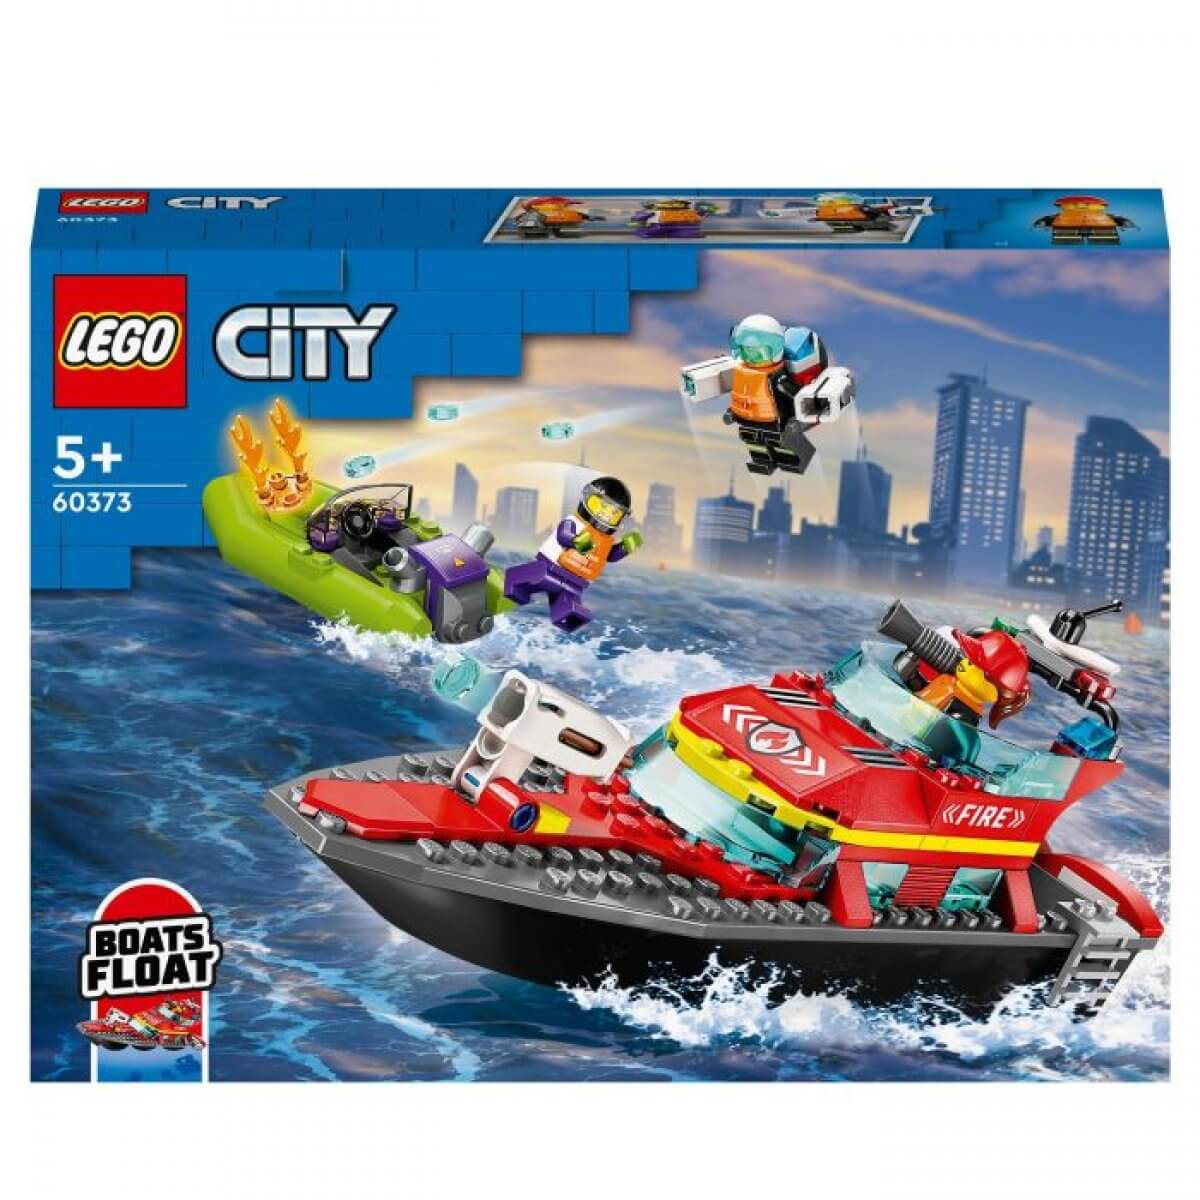 Fobie oppervlakte essay City 60373 brandweerboot - 60373 - LEGO | Speldorado